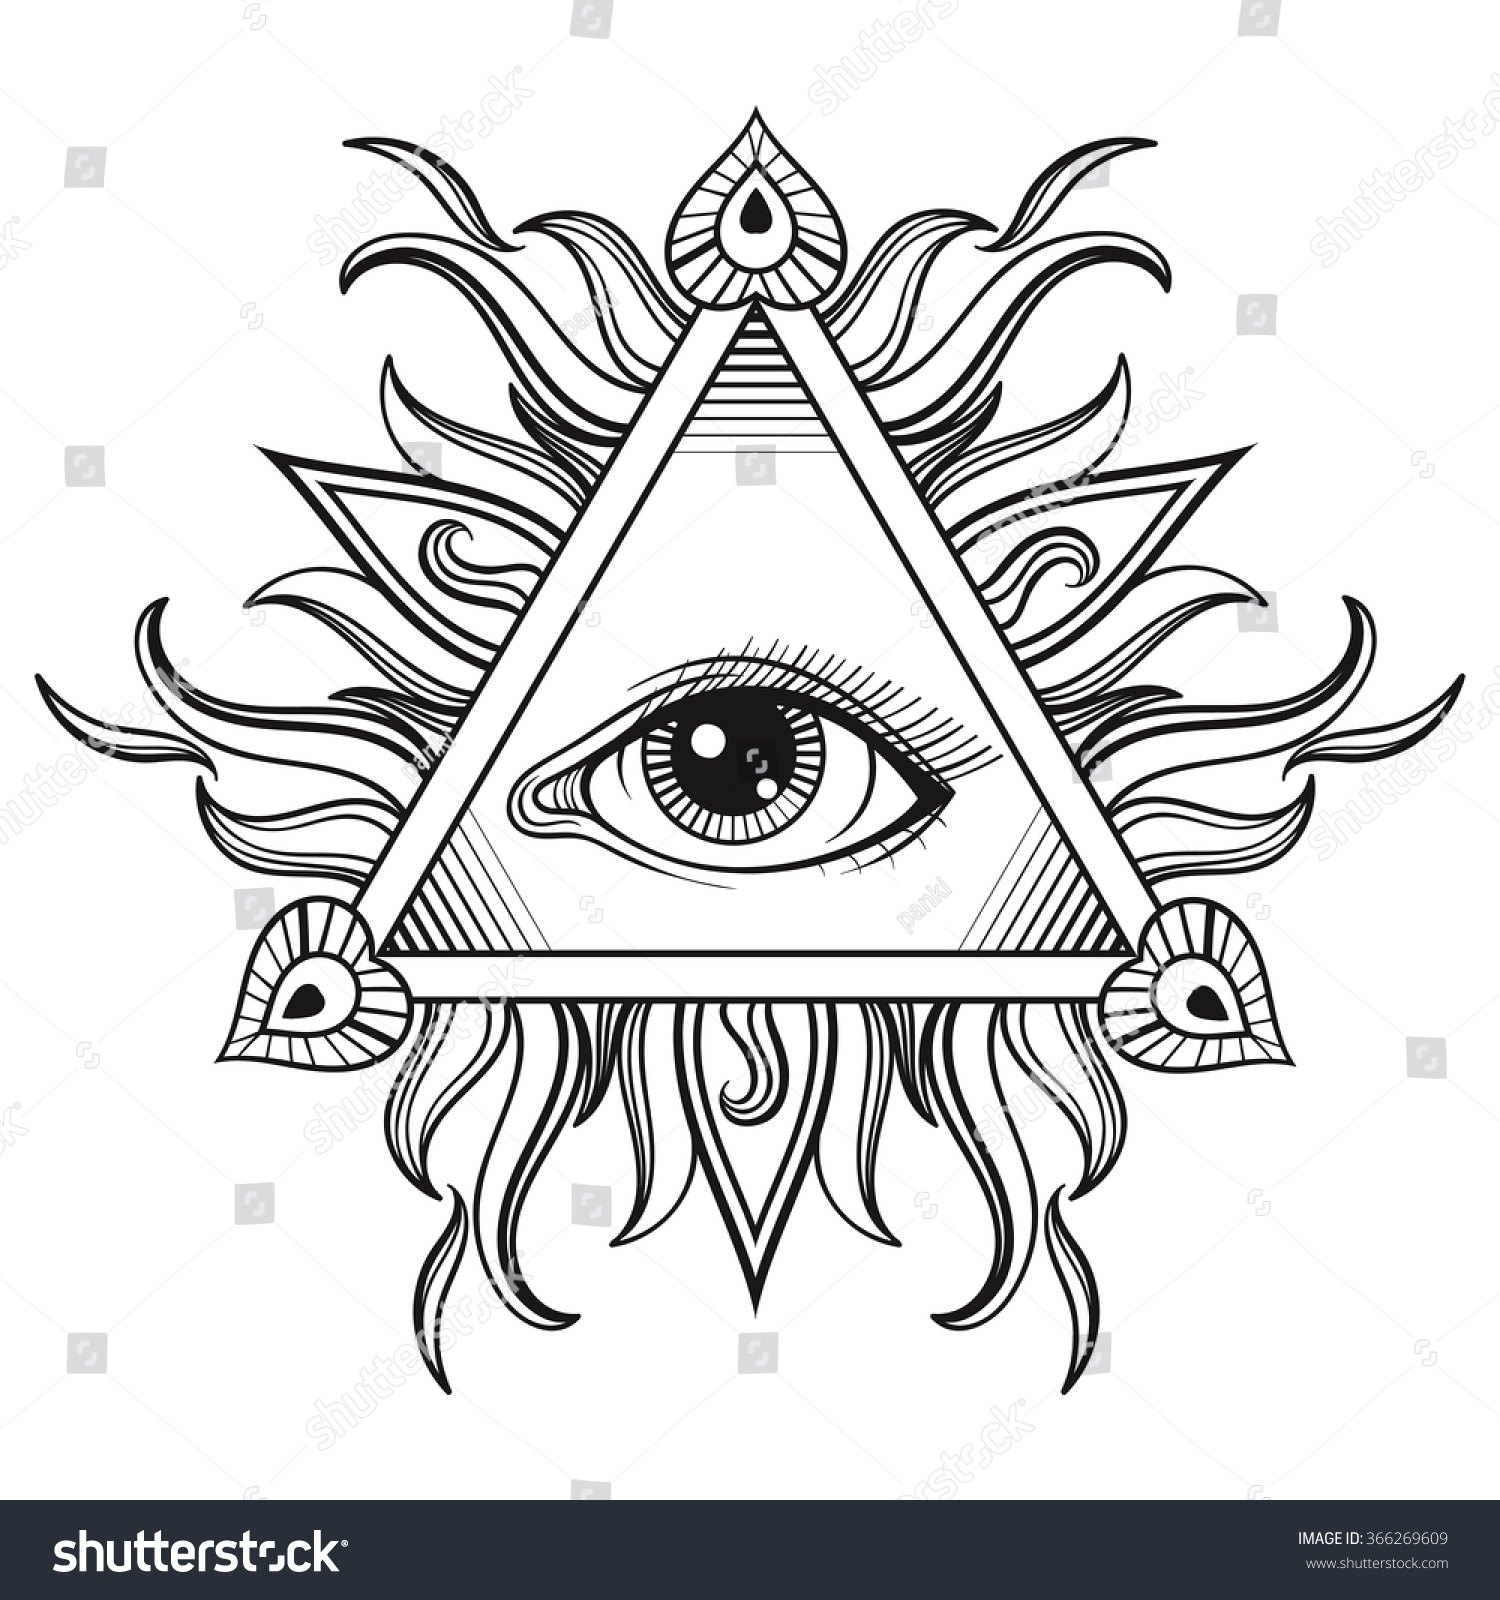 All Seeing Eye Pyramid Symbol Tattoo Stock Illustration 366269609 ...